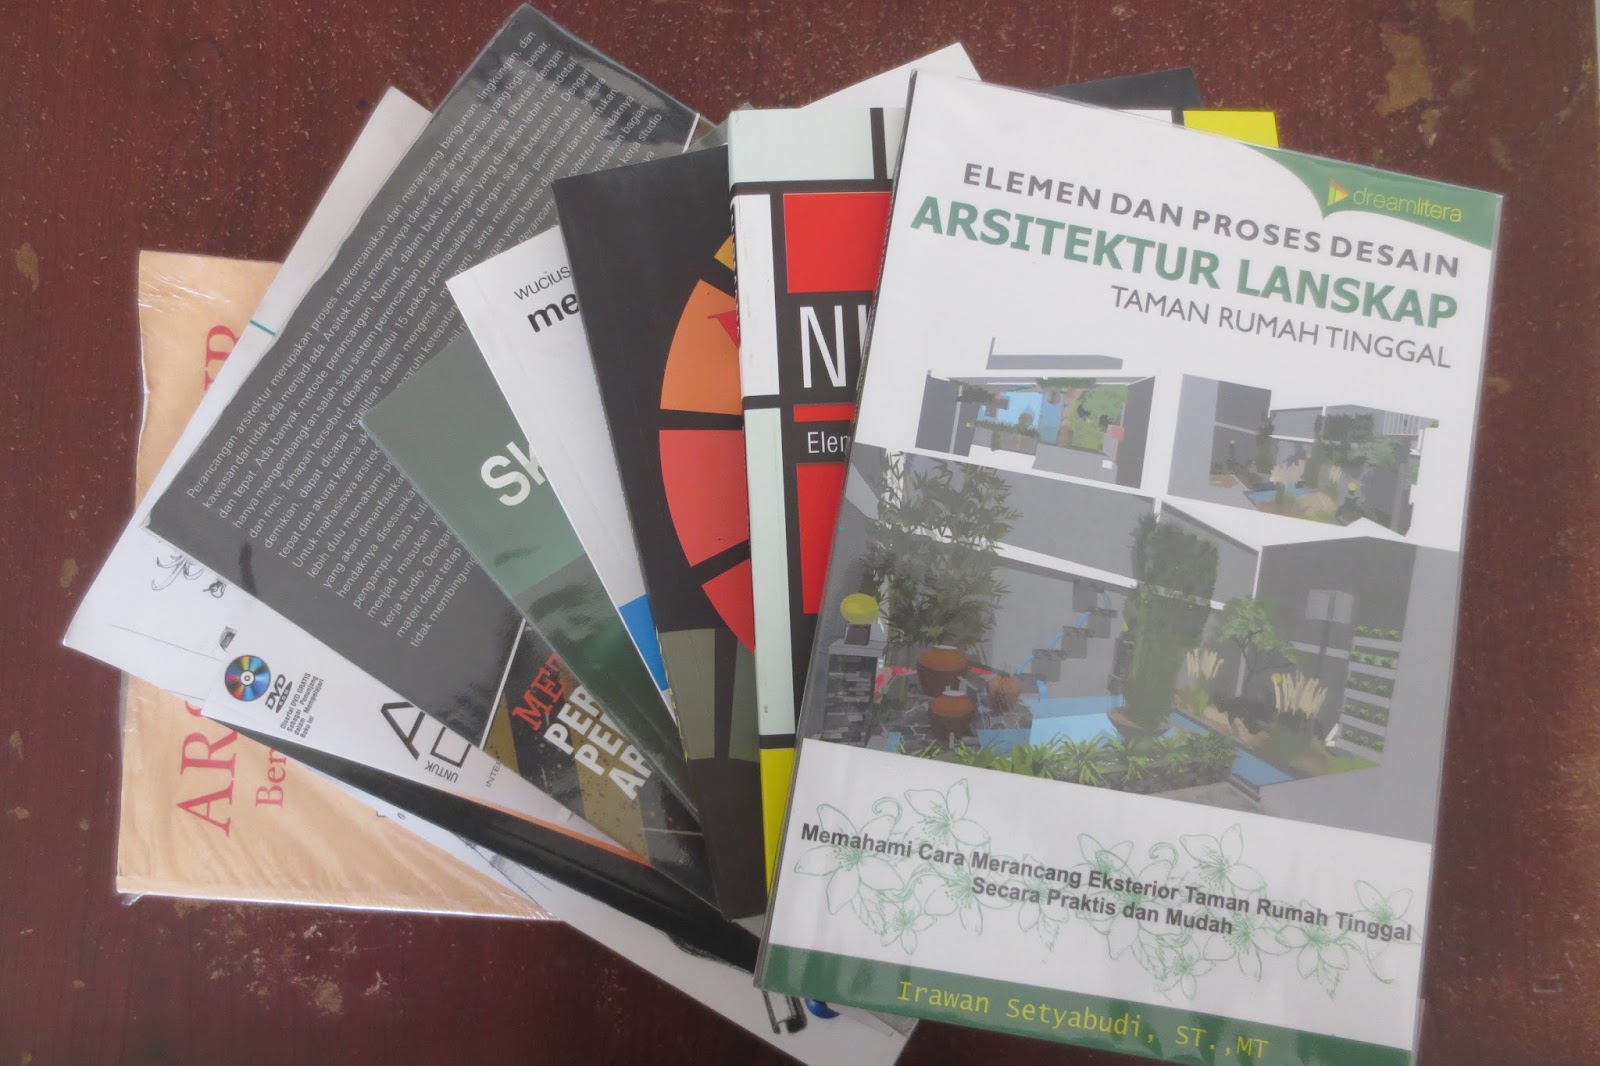 Promo Buku Ajar Elemen Dan Proses Desain Arsitektur Lanskap Taman